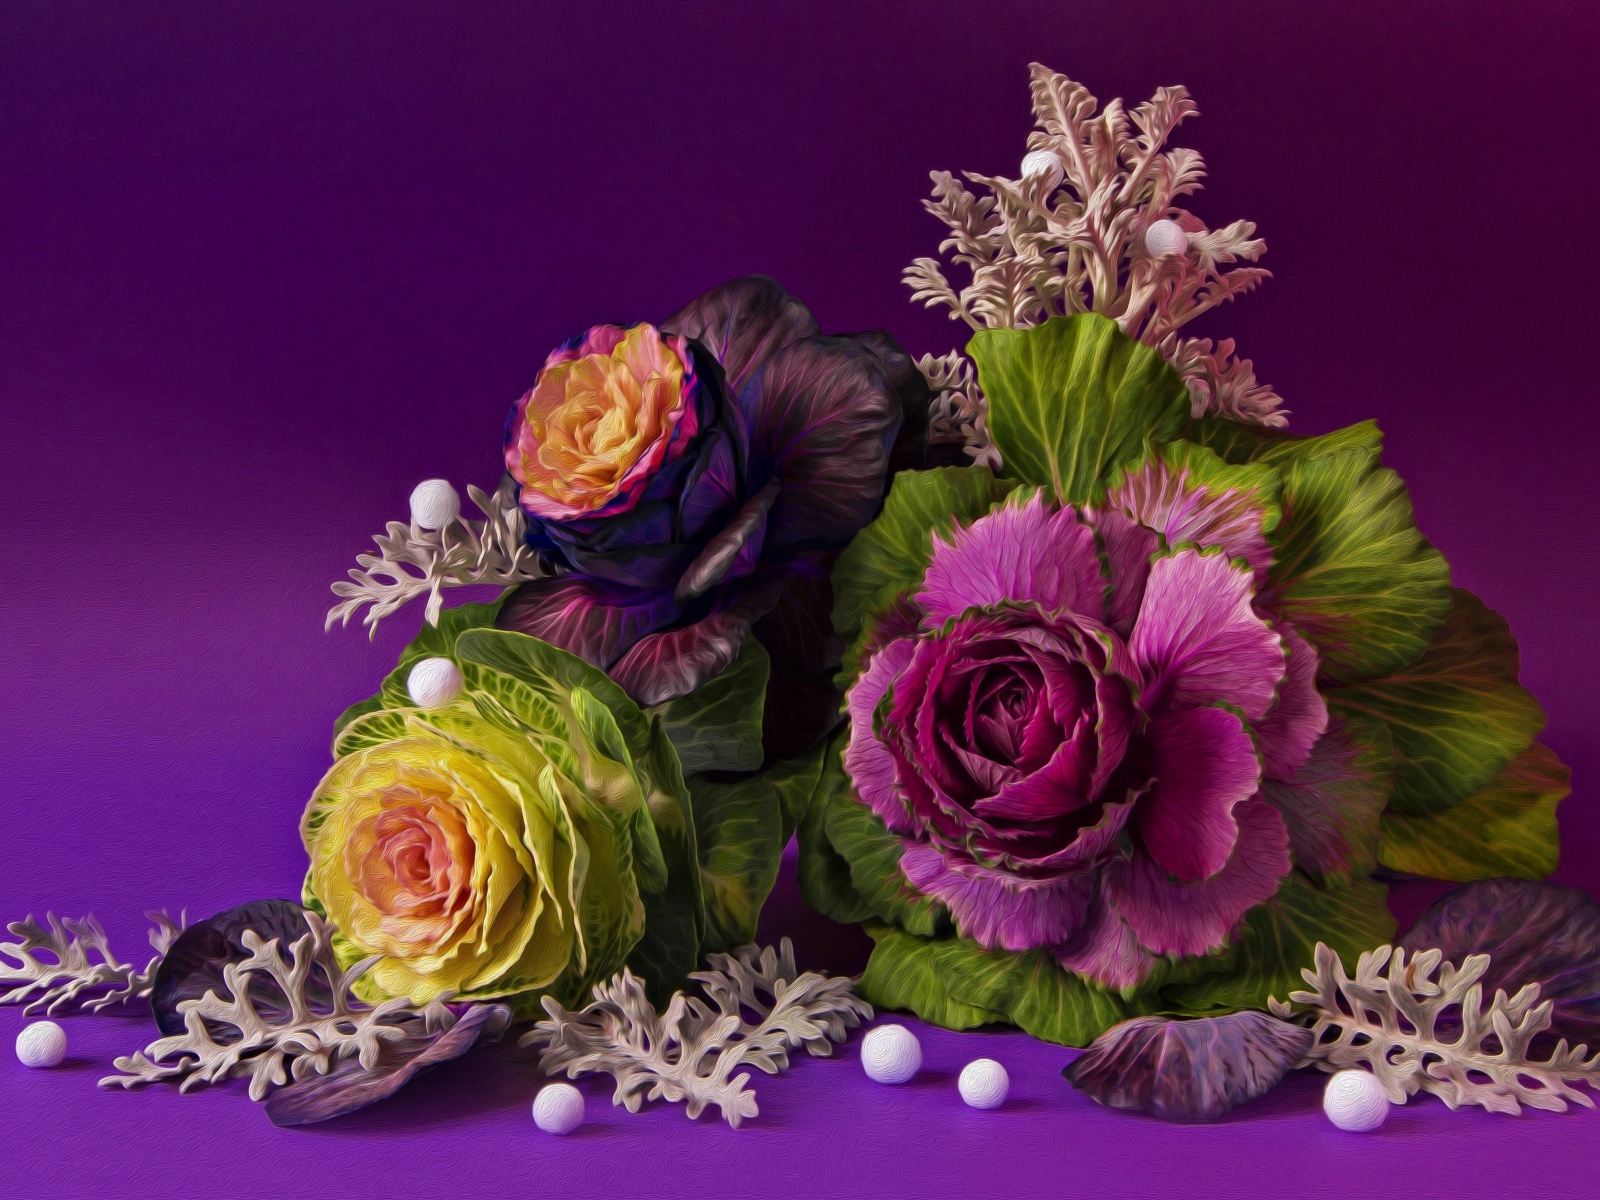 Flowers of decorative cabbage on a violet background, fractal pattern